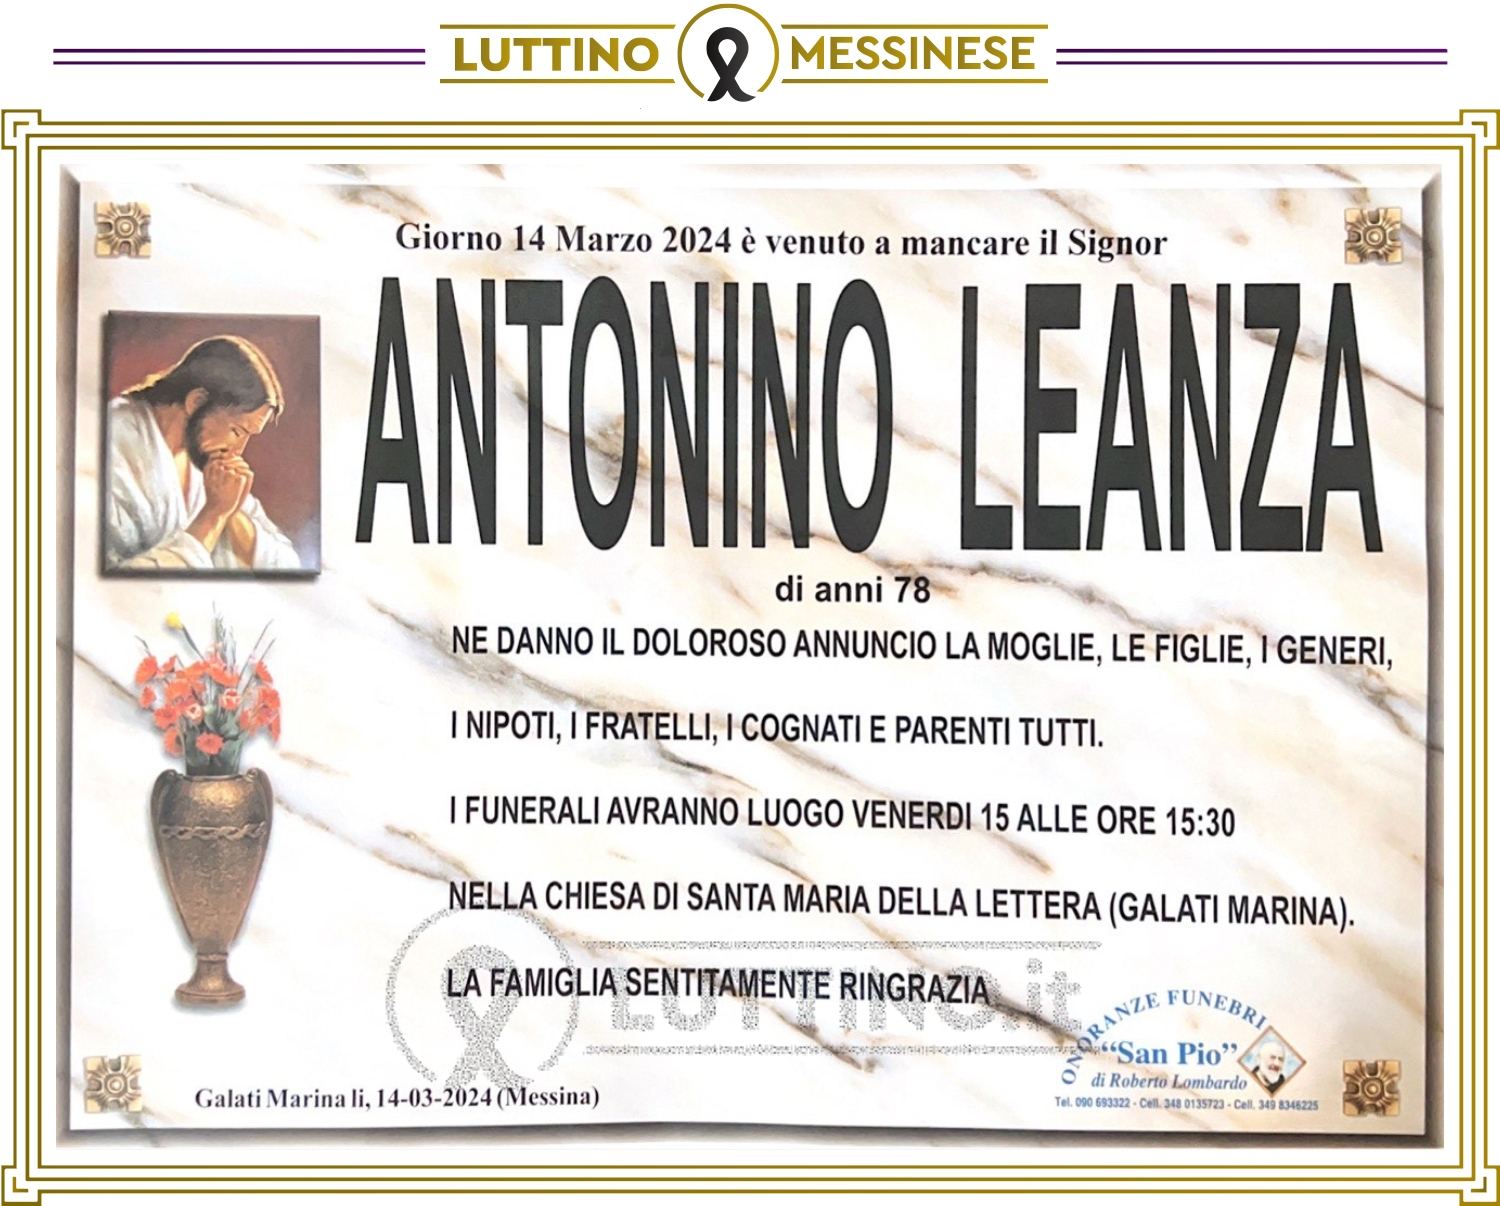 Antonino Leanza